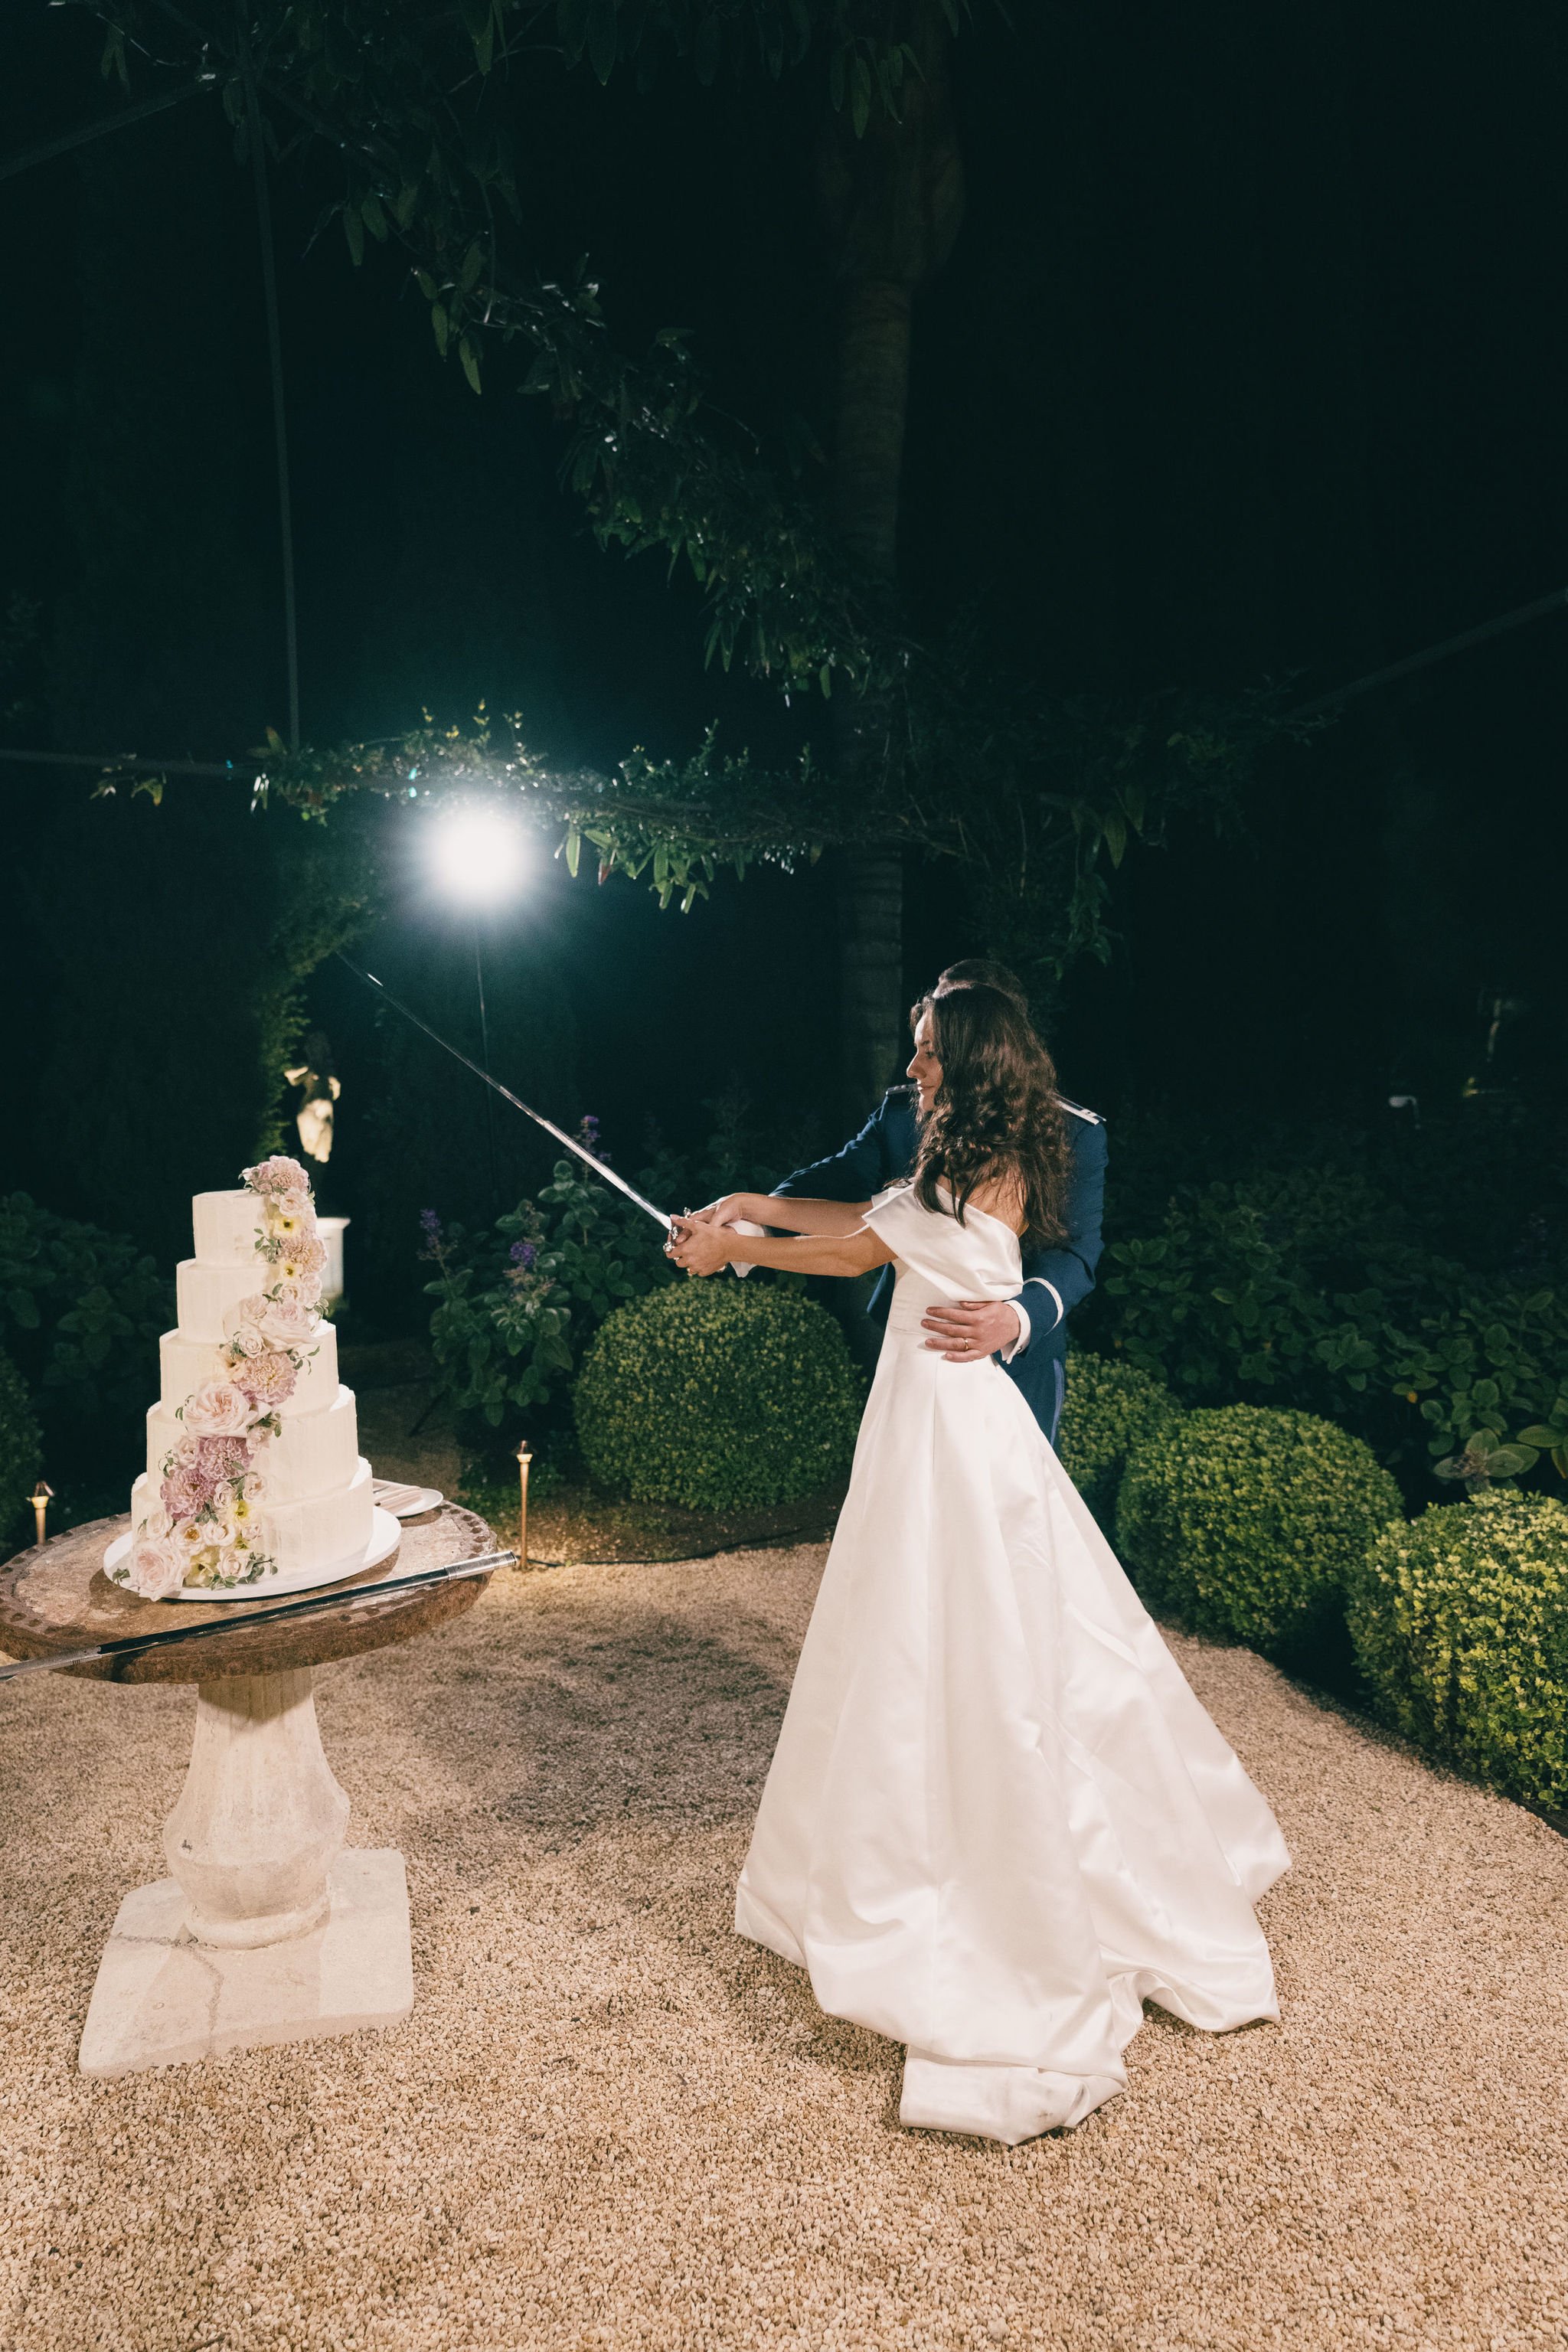 www.santabarbarawedding.com | Kurt Boomer Photography | Details, Darling | Alexis Ireland Florals | Downbeat Agency | Cake Cathedral | Couple Cutting the Wedding Cake